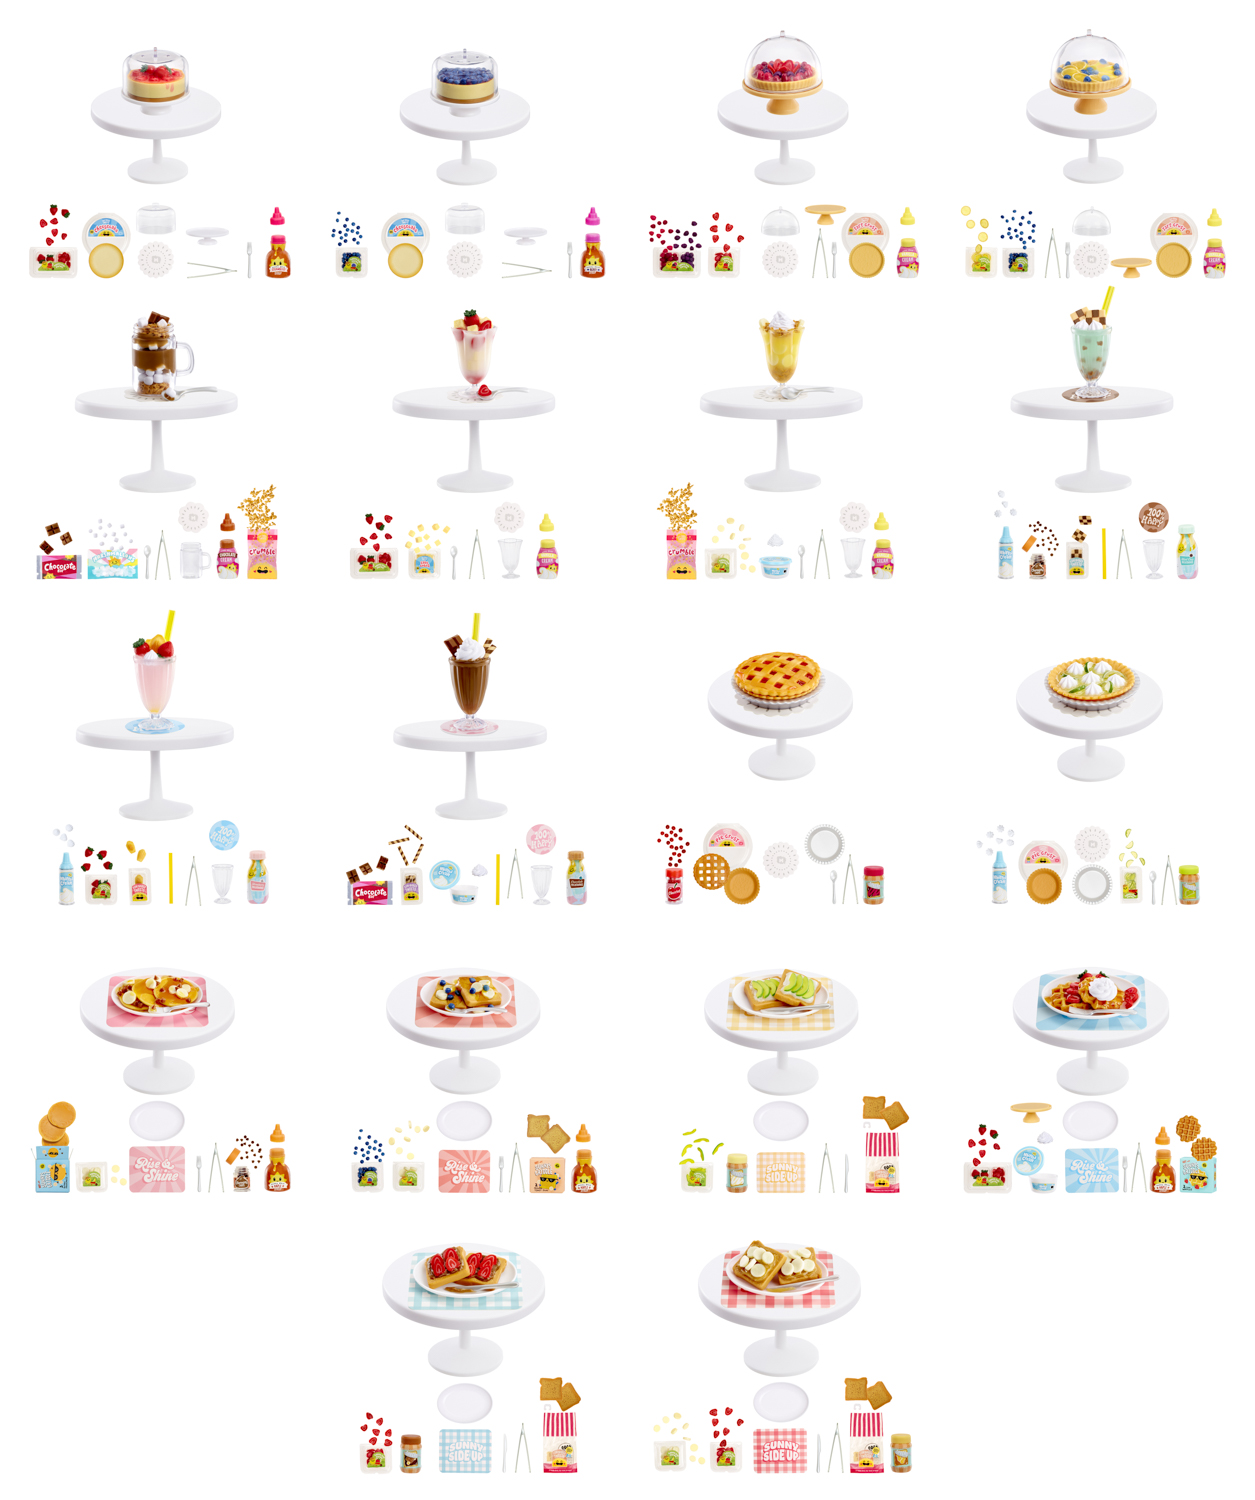 Miniverse Make It Mini Food Cafe Series 2 (Regular)